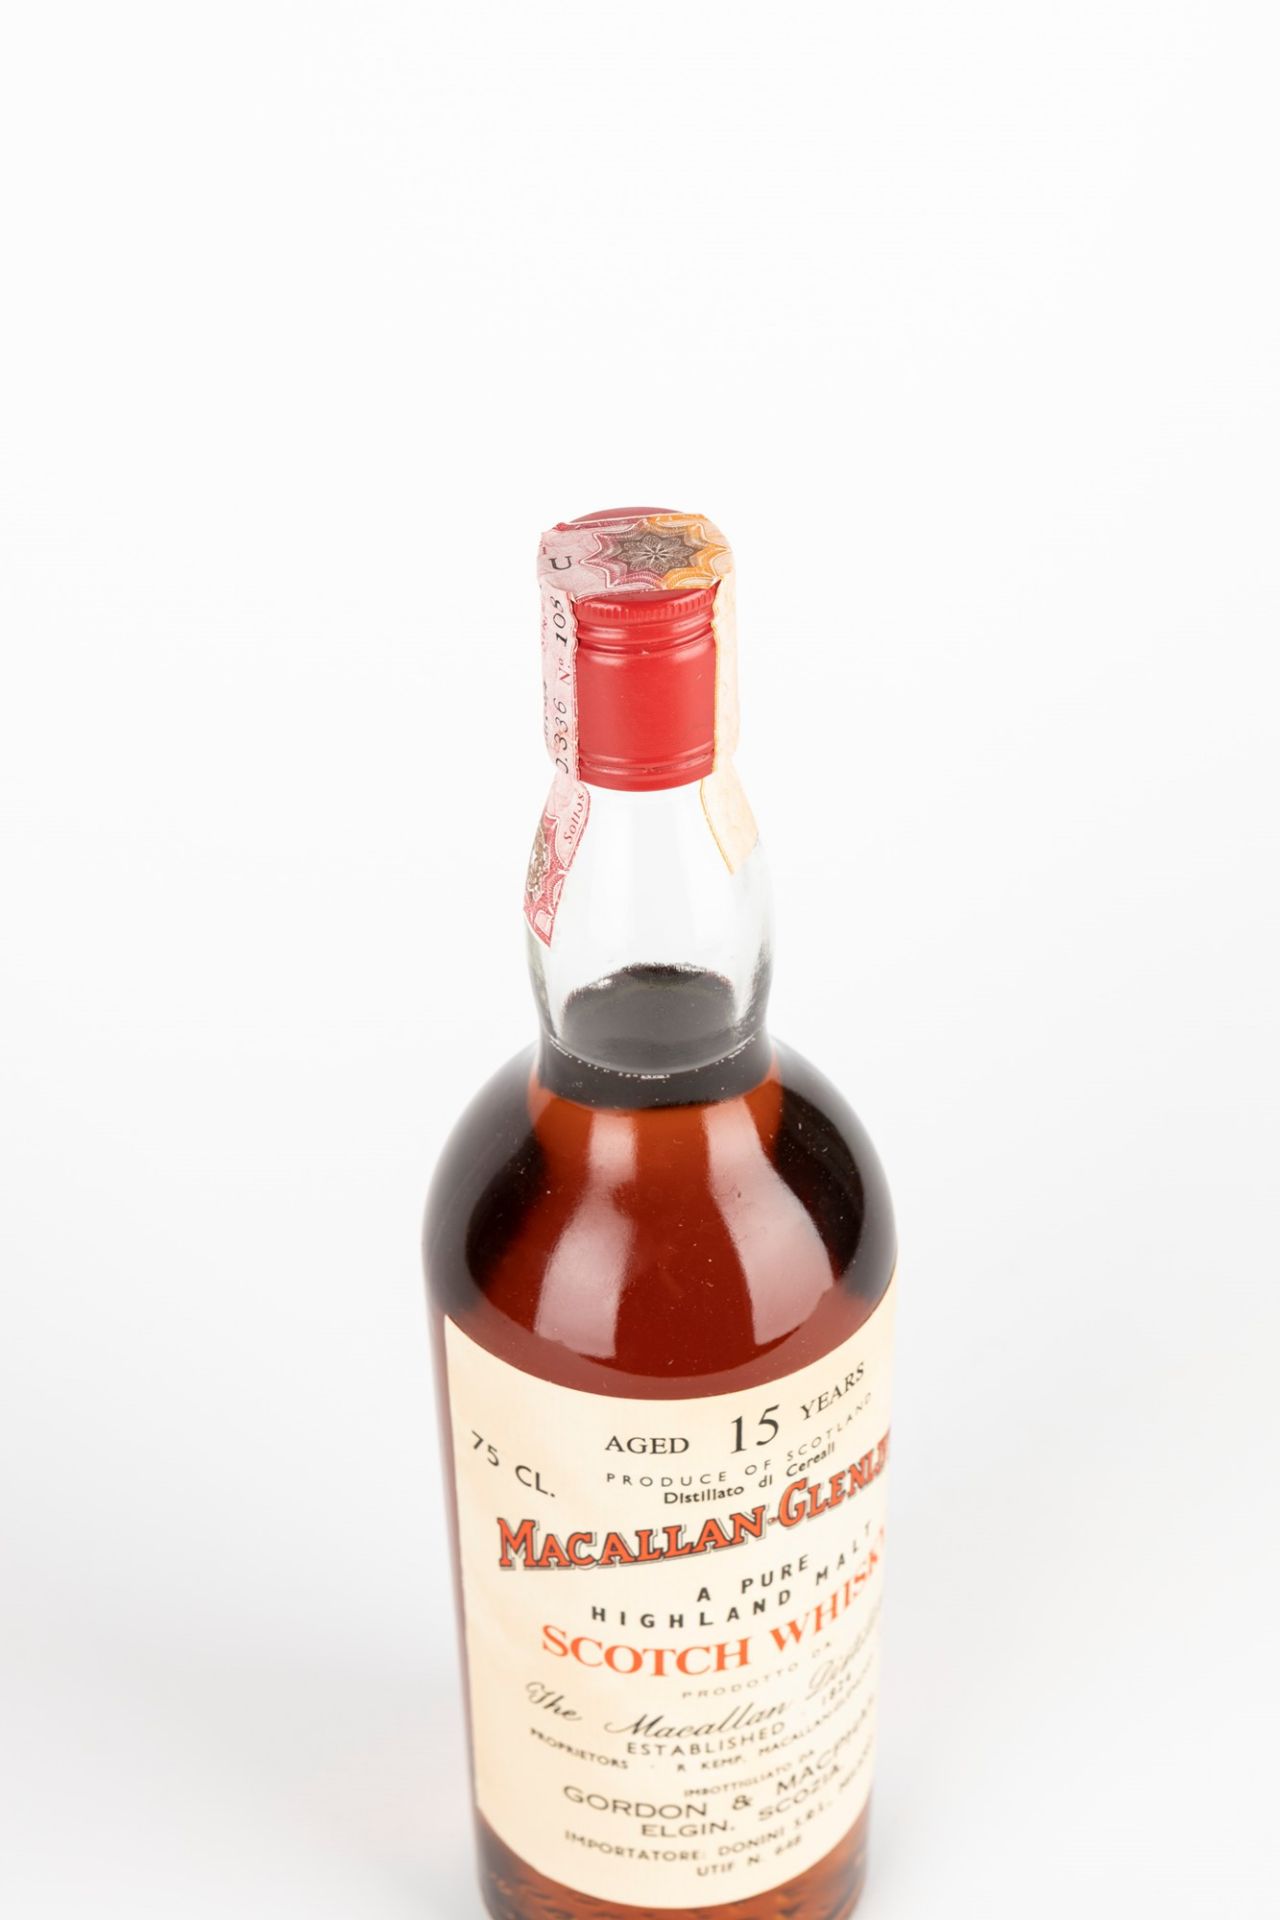 Scotland - Whisky / Macallan Glenlivet 15 YO - Image 4 of 4